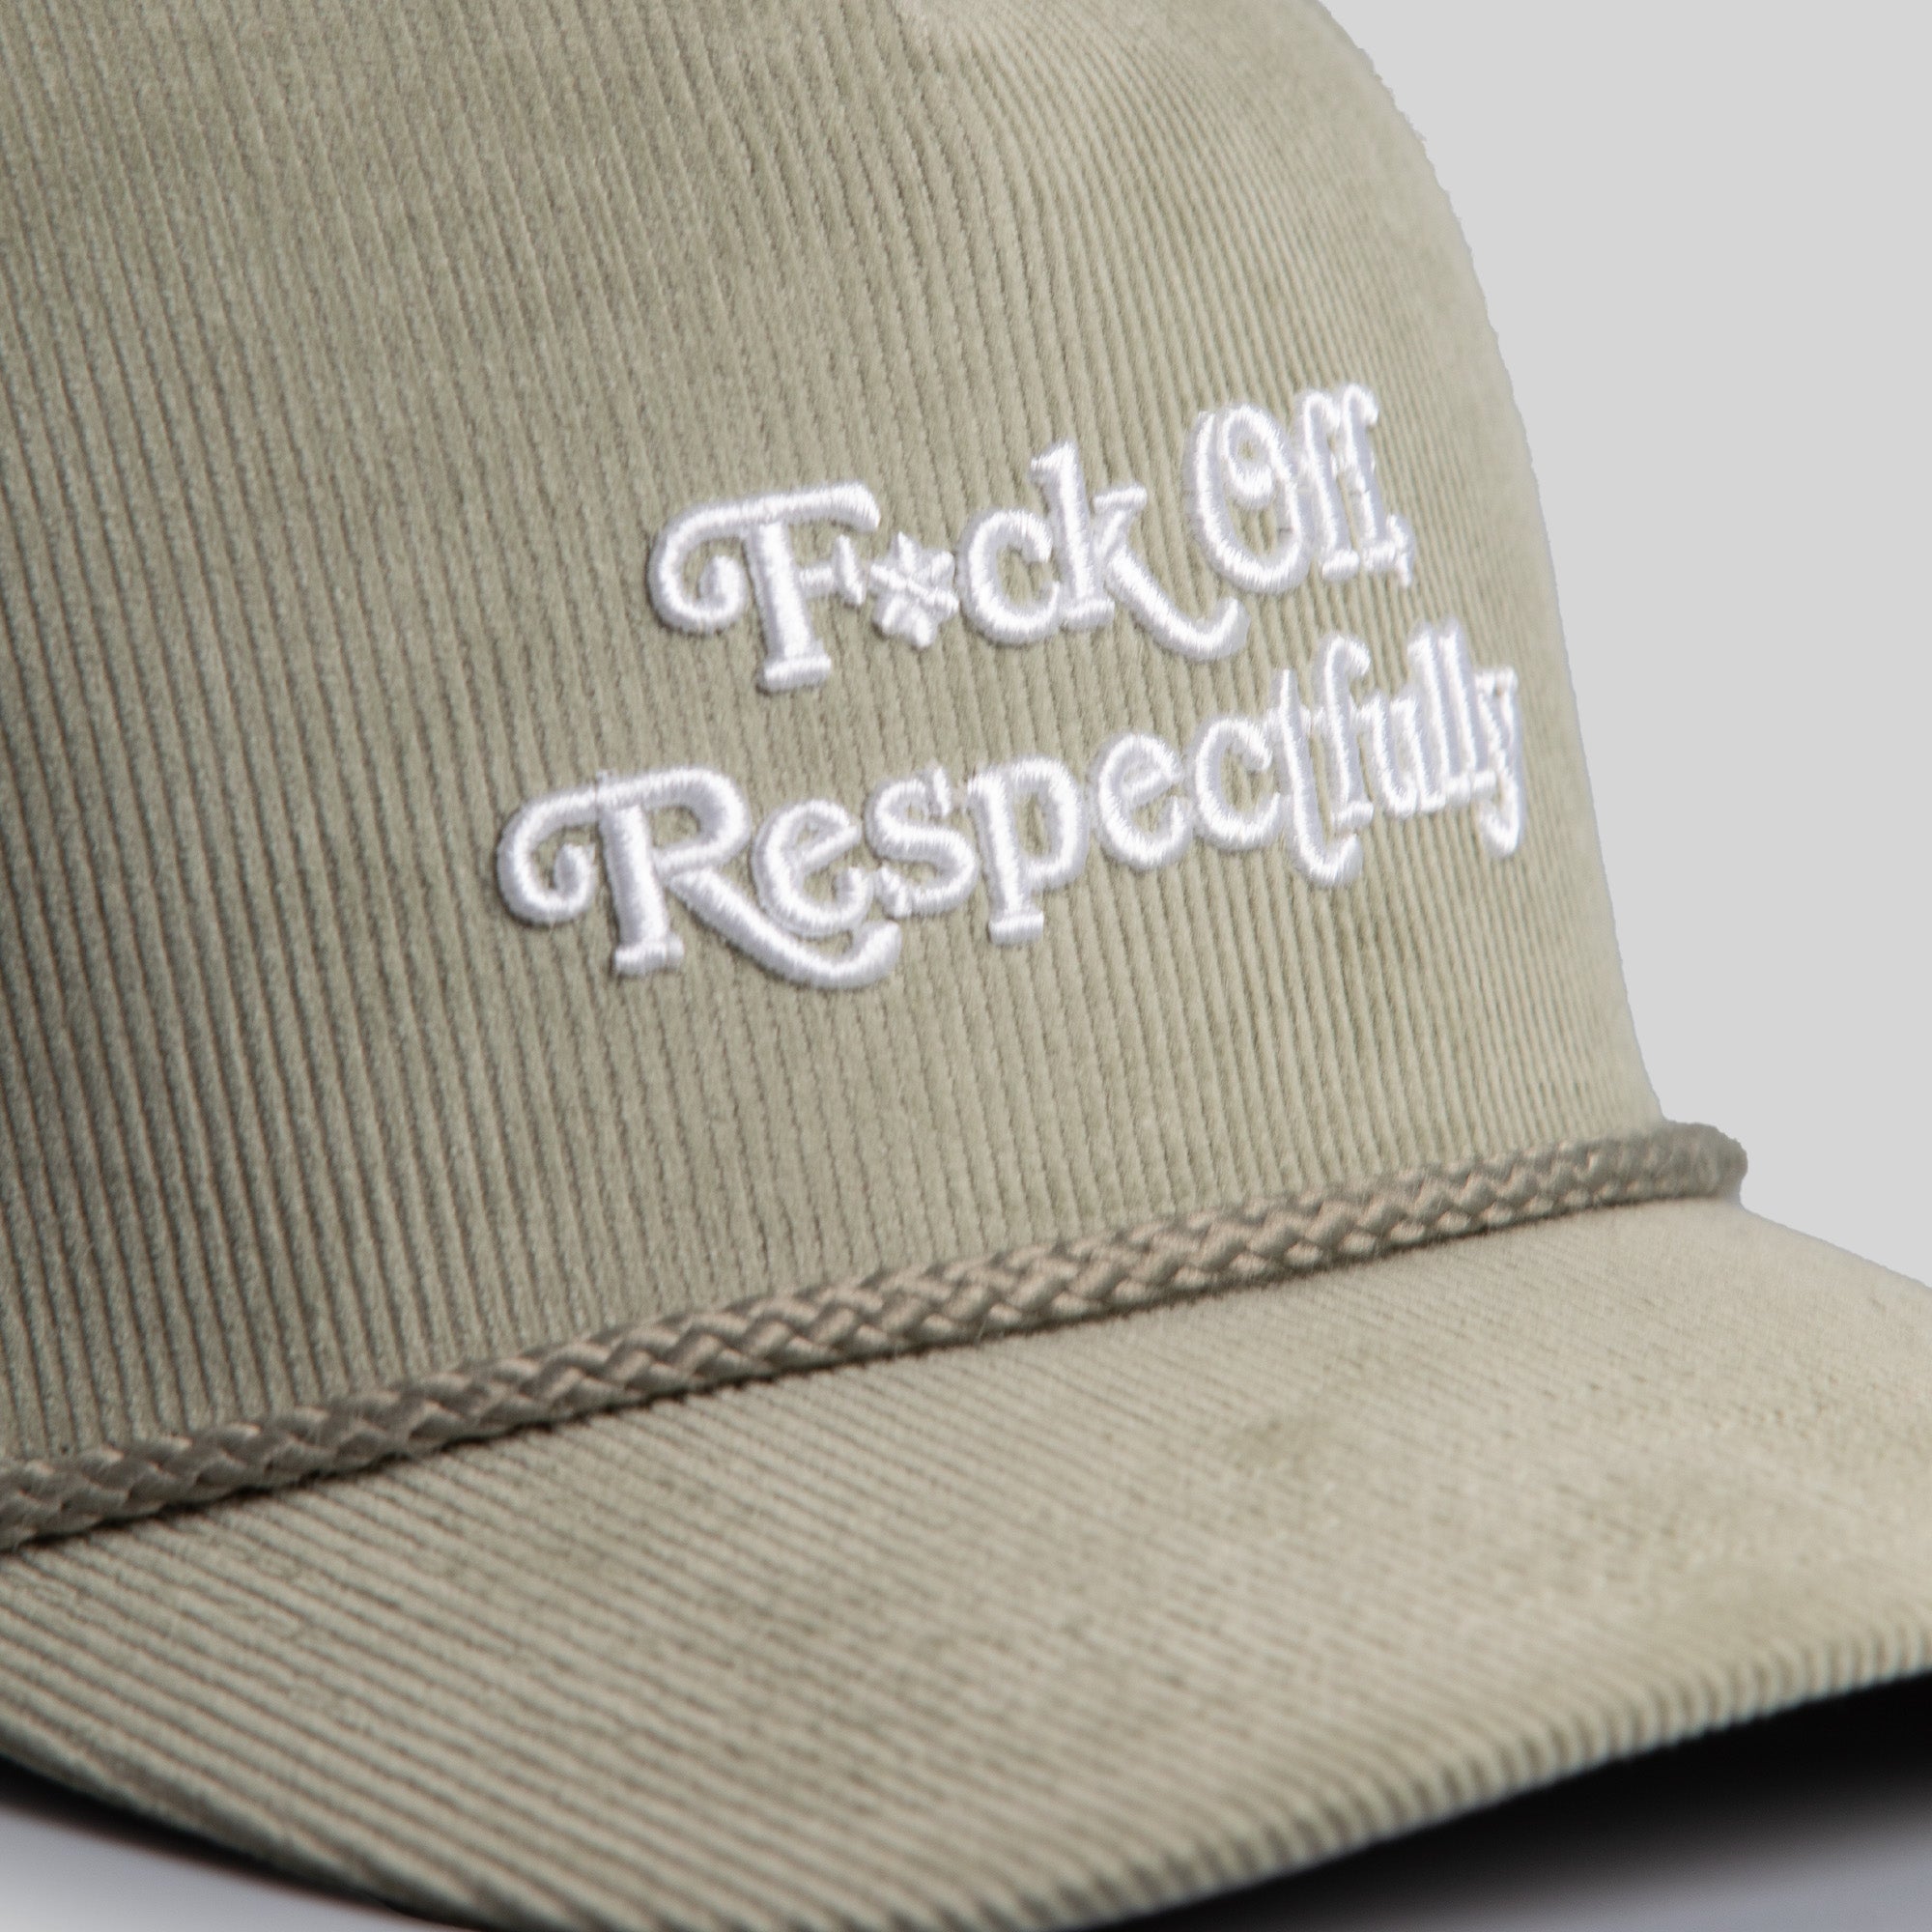 RESPECTFULLY JADE CORDUROY TRUCKER HAT